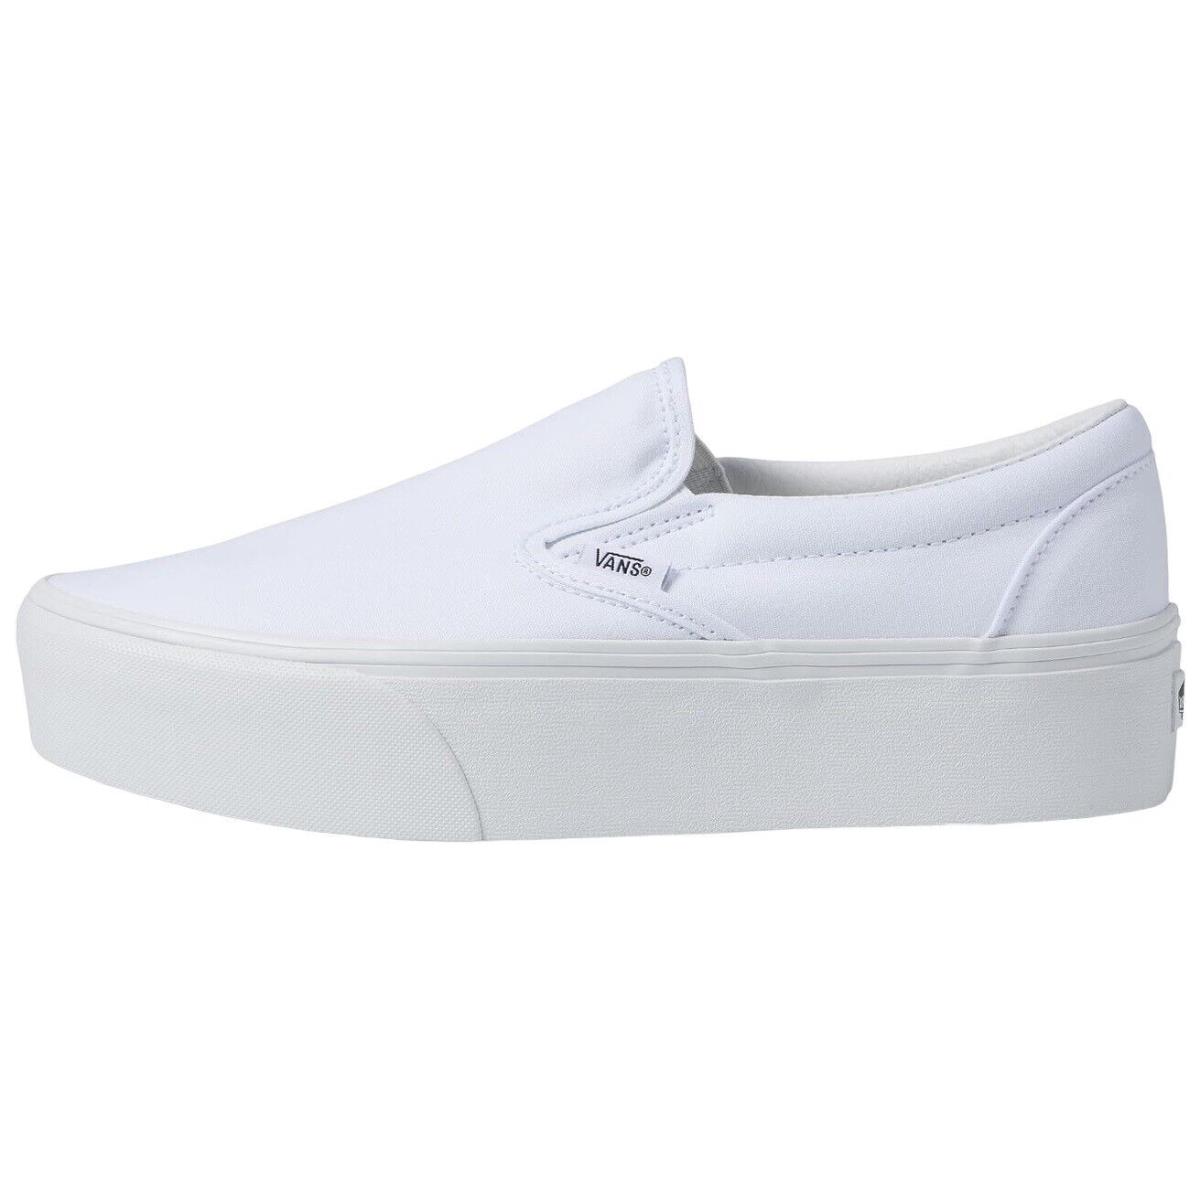 Vans Classic Slip-on Stackform Shoes Mens Womens Canvas Platform Sneakers True White